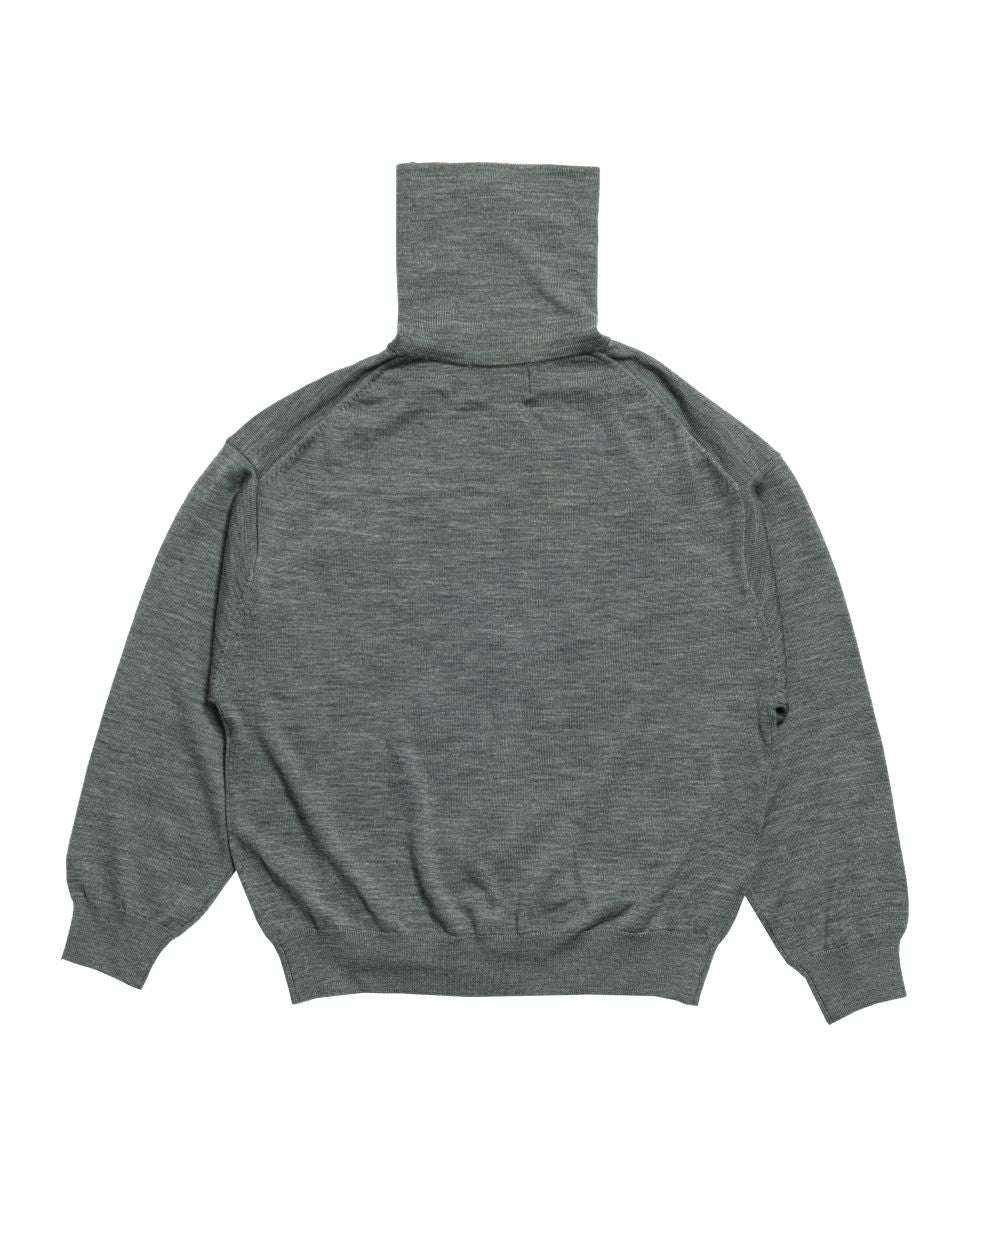 Merino Wool Turtleneck Sweater[M.GRAY]